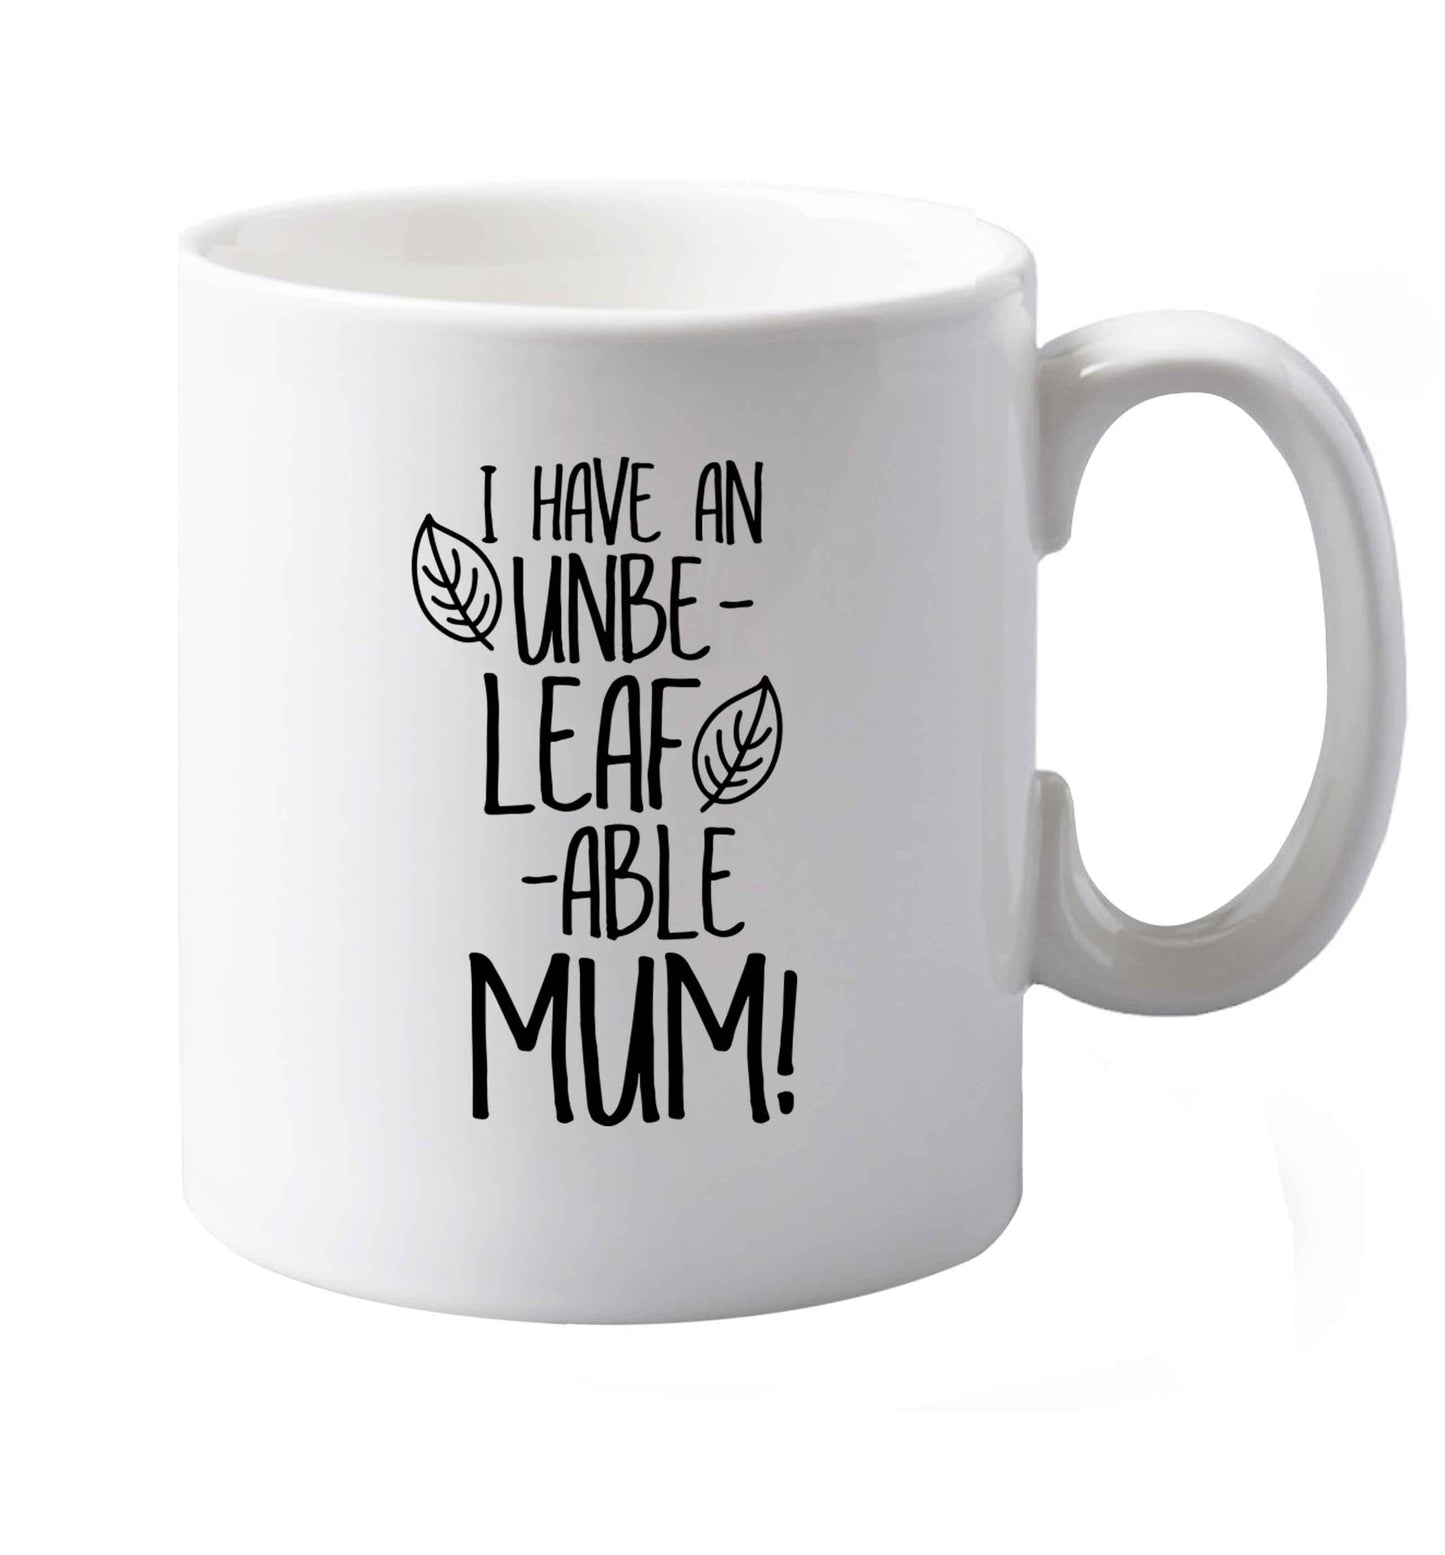 10 oz I have an unbeleafable mum! ceramic mug both sides